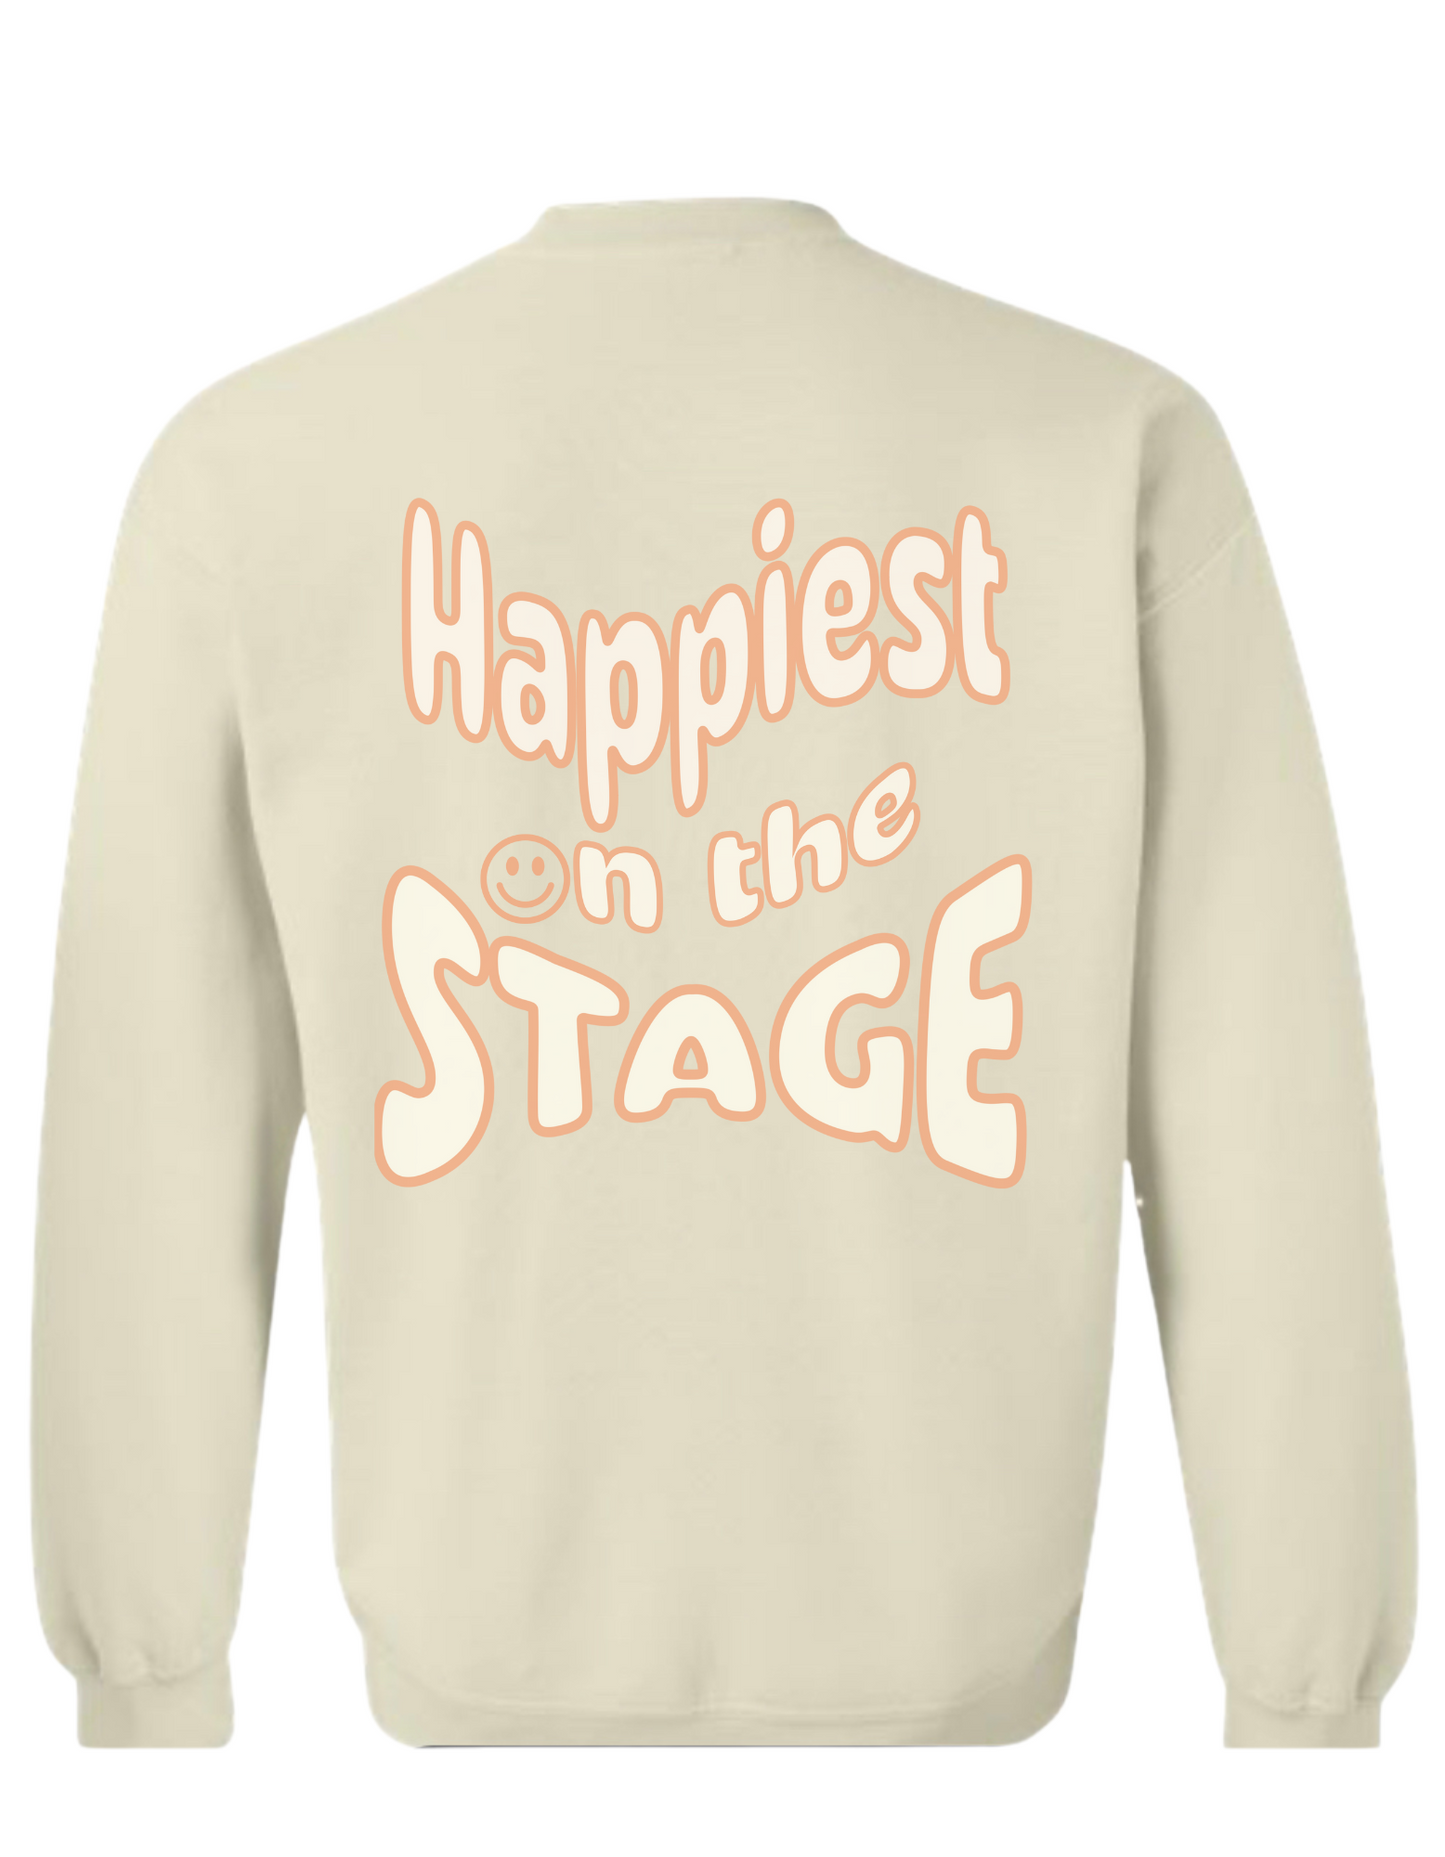 Happiest on the Stage - Adult Sweatshirt